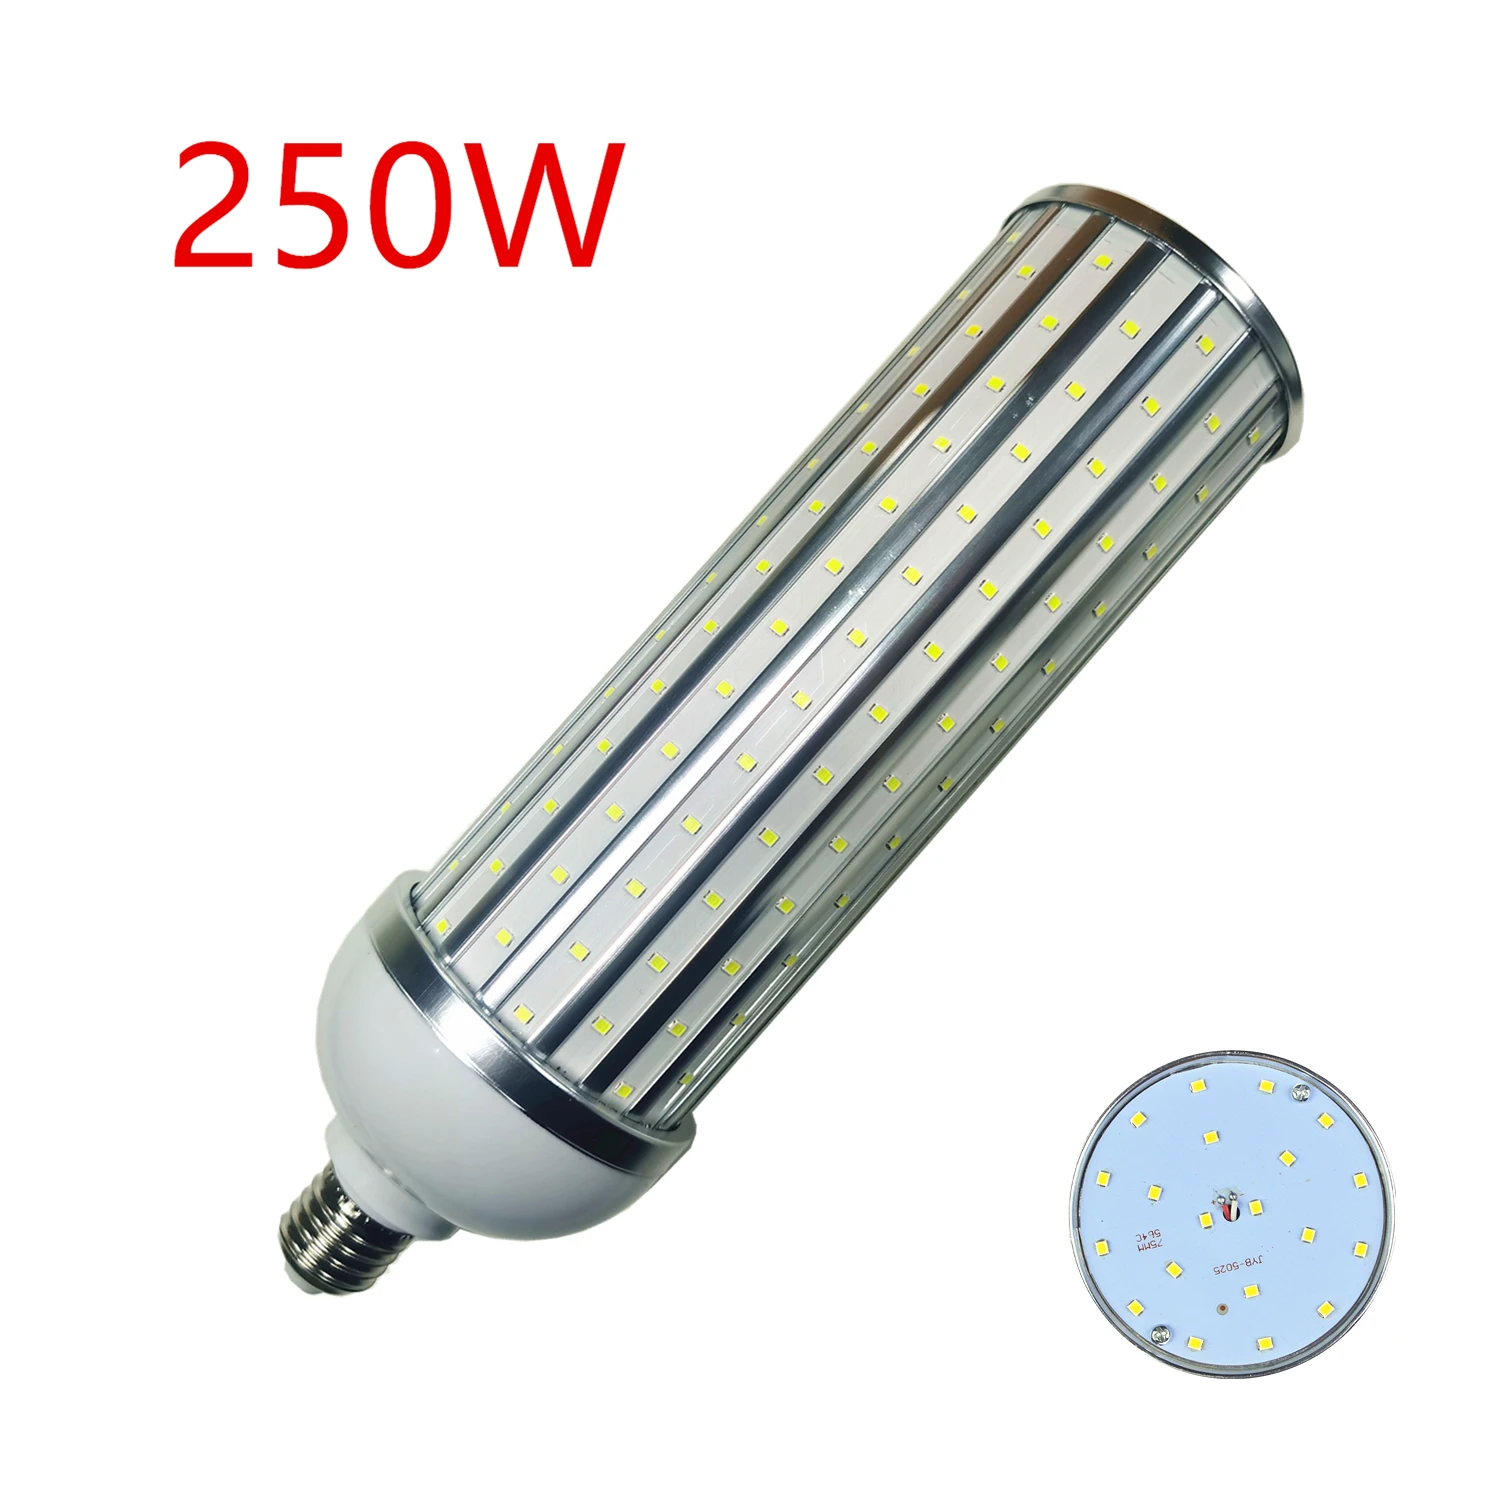 

250W 200W 100W 80W 60W 50W 40W 30W 25W LED Bulb Aluminum shell lamp 220V E26 E27 E39 E40 Corn light street lamp Cool Warm White